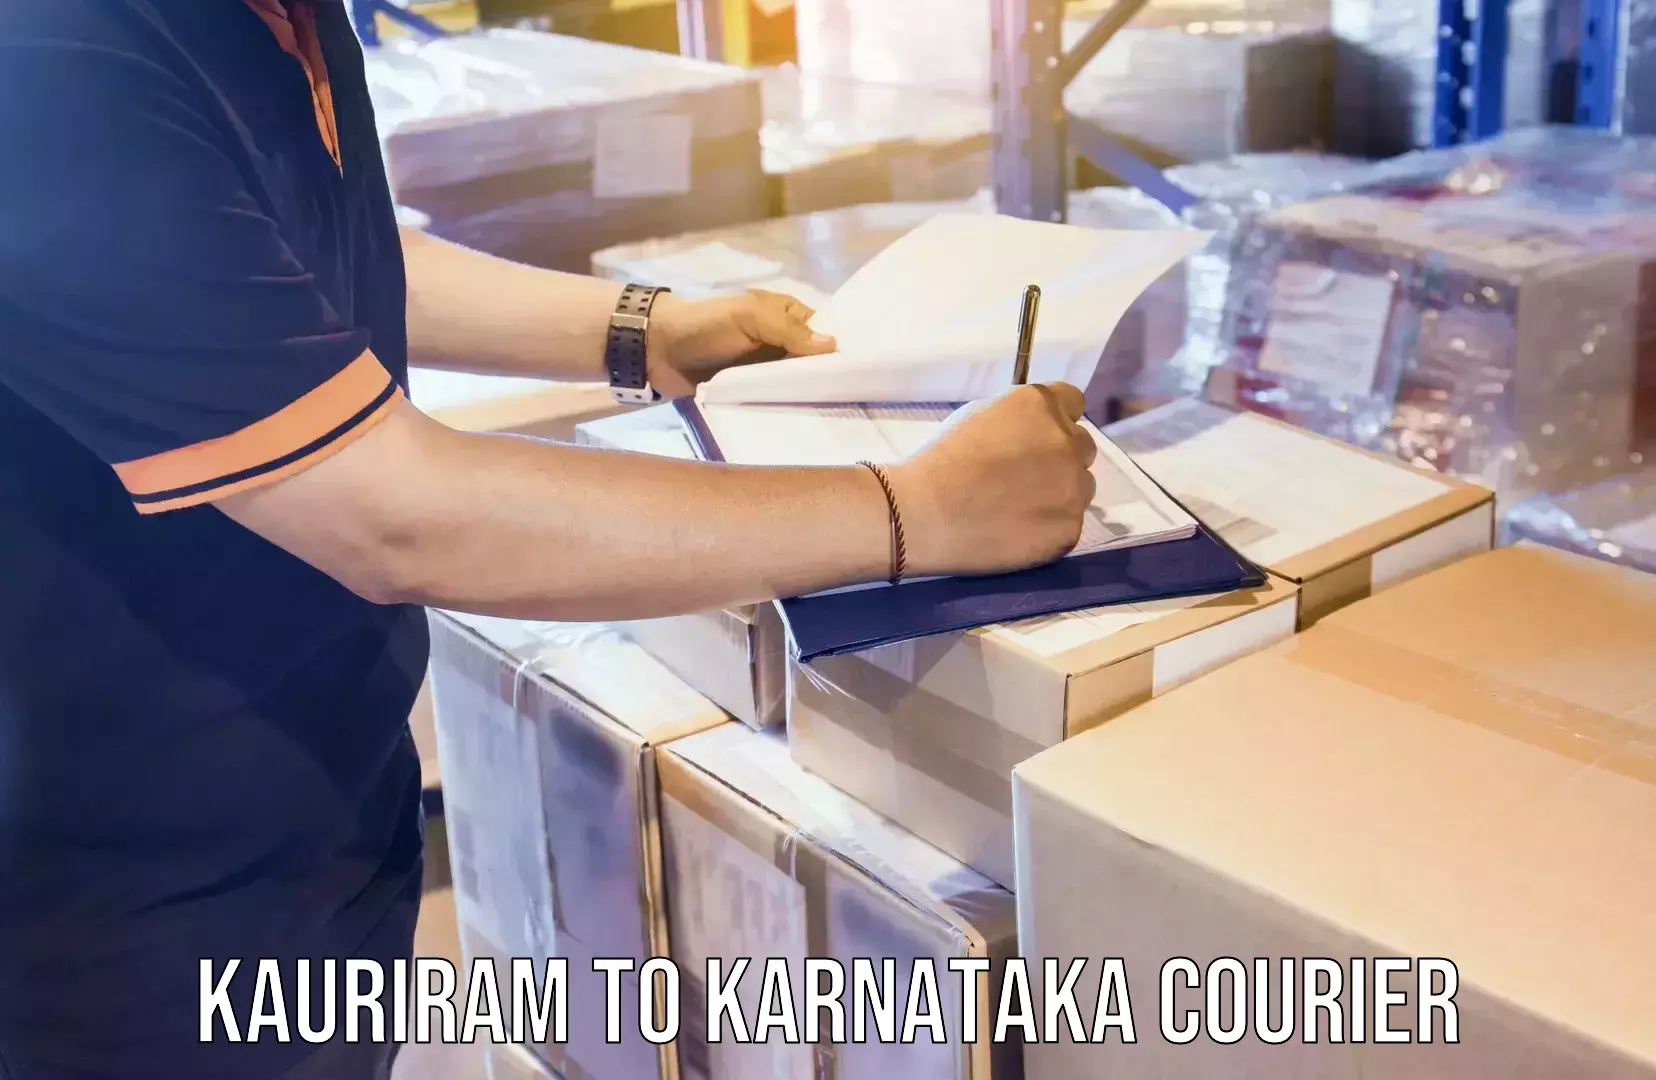 Skilled movers Kauriram to Karnataka